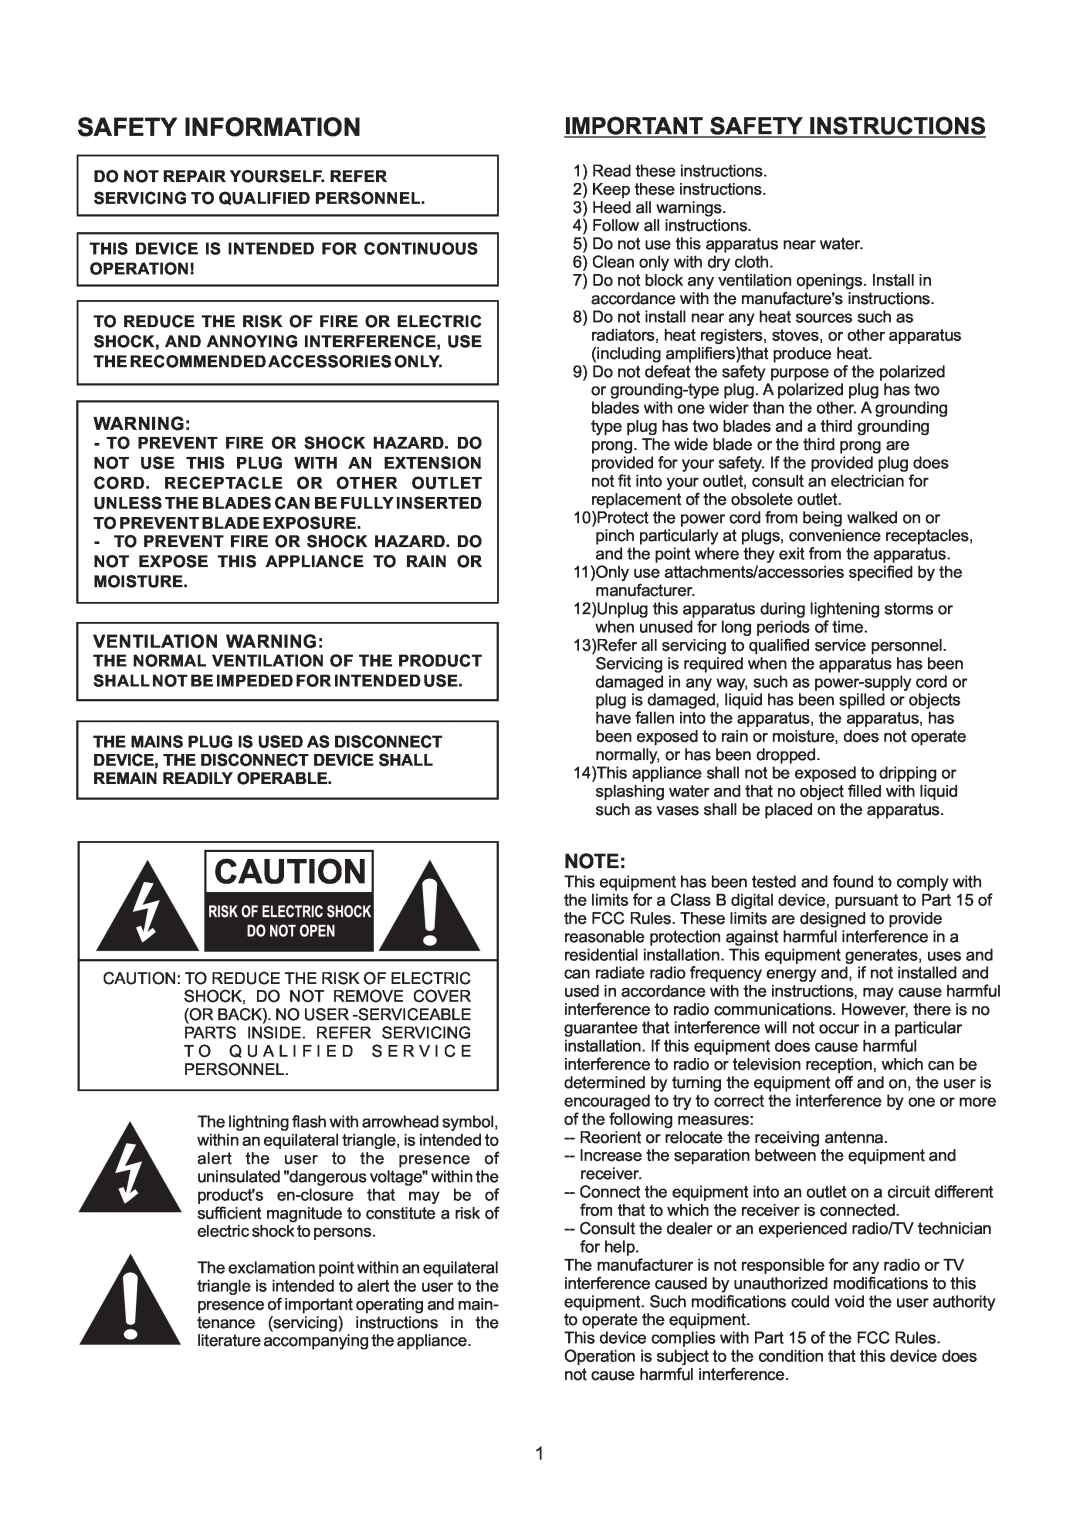 Haier HLT71 user manual Safety Information, Important Safety Instructions, Ventilation Warning 